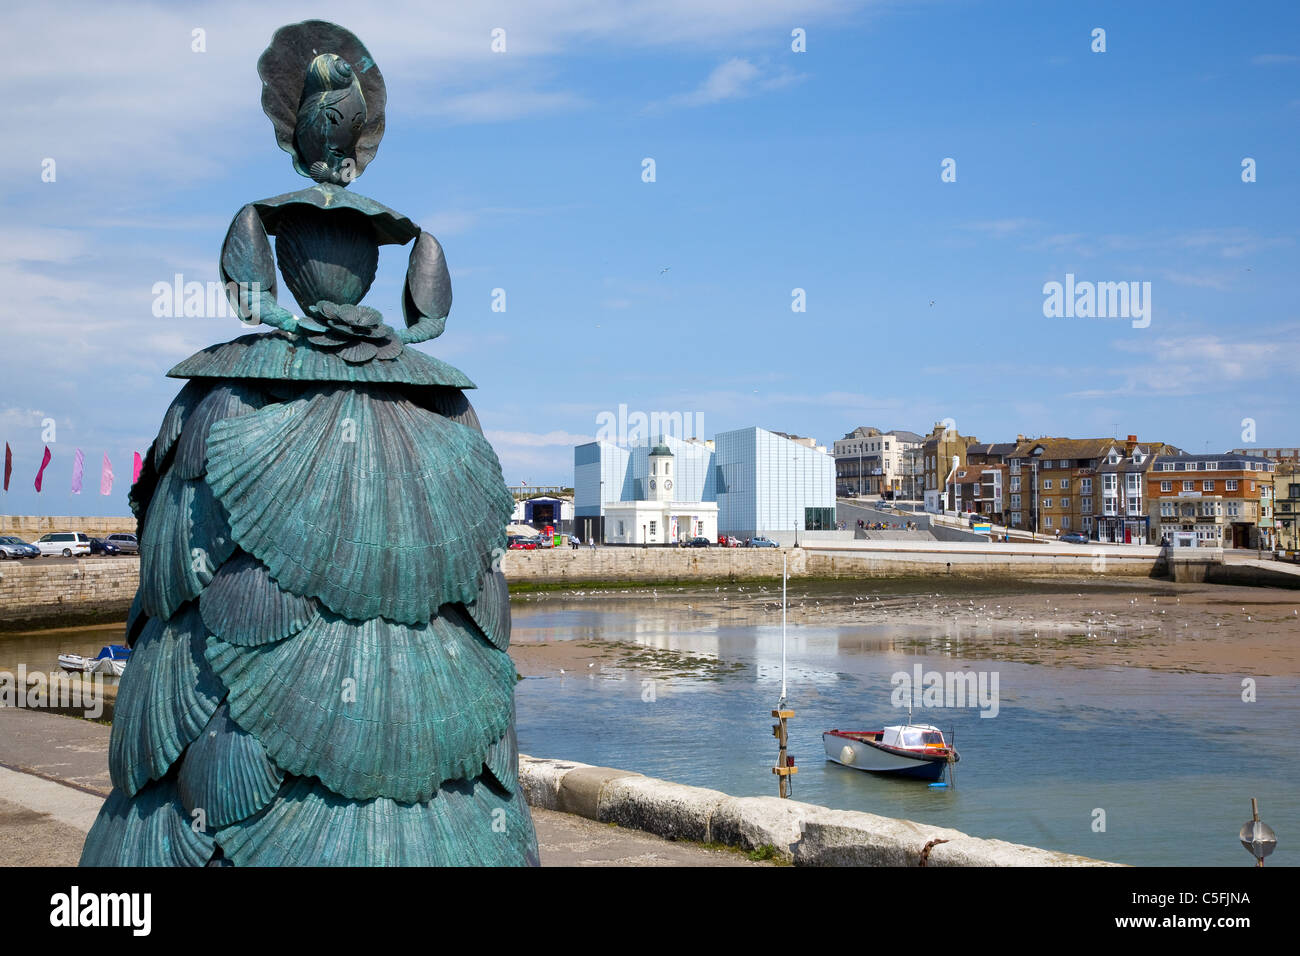 MARGATE: Turner contemporánea con la estatua de la señora booth: SHELL DAMA DE MARGATE POR ANN CARRINGTON Foto de stock